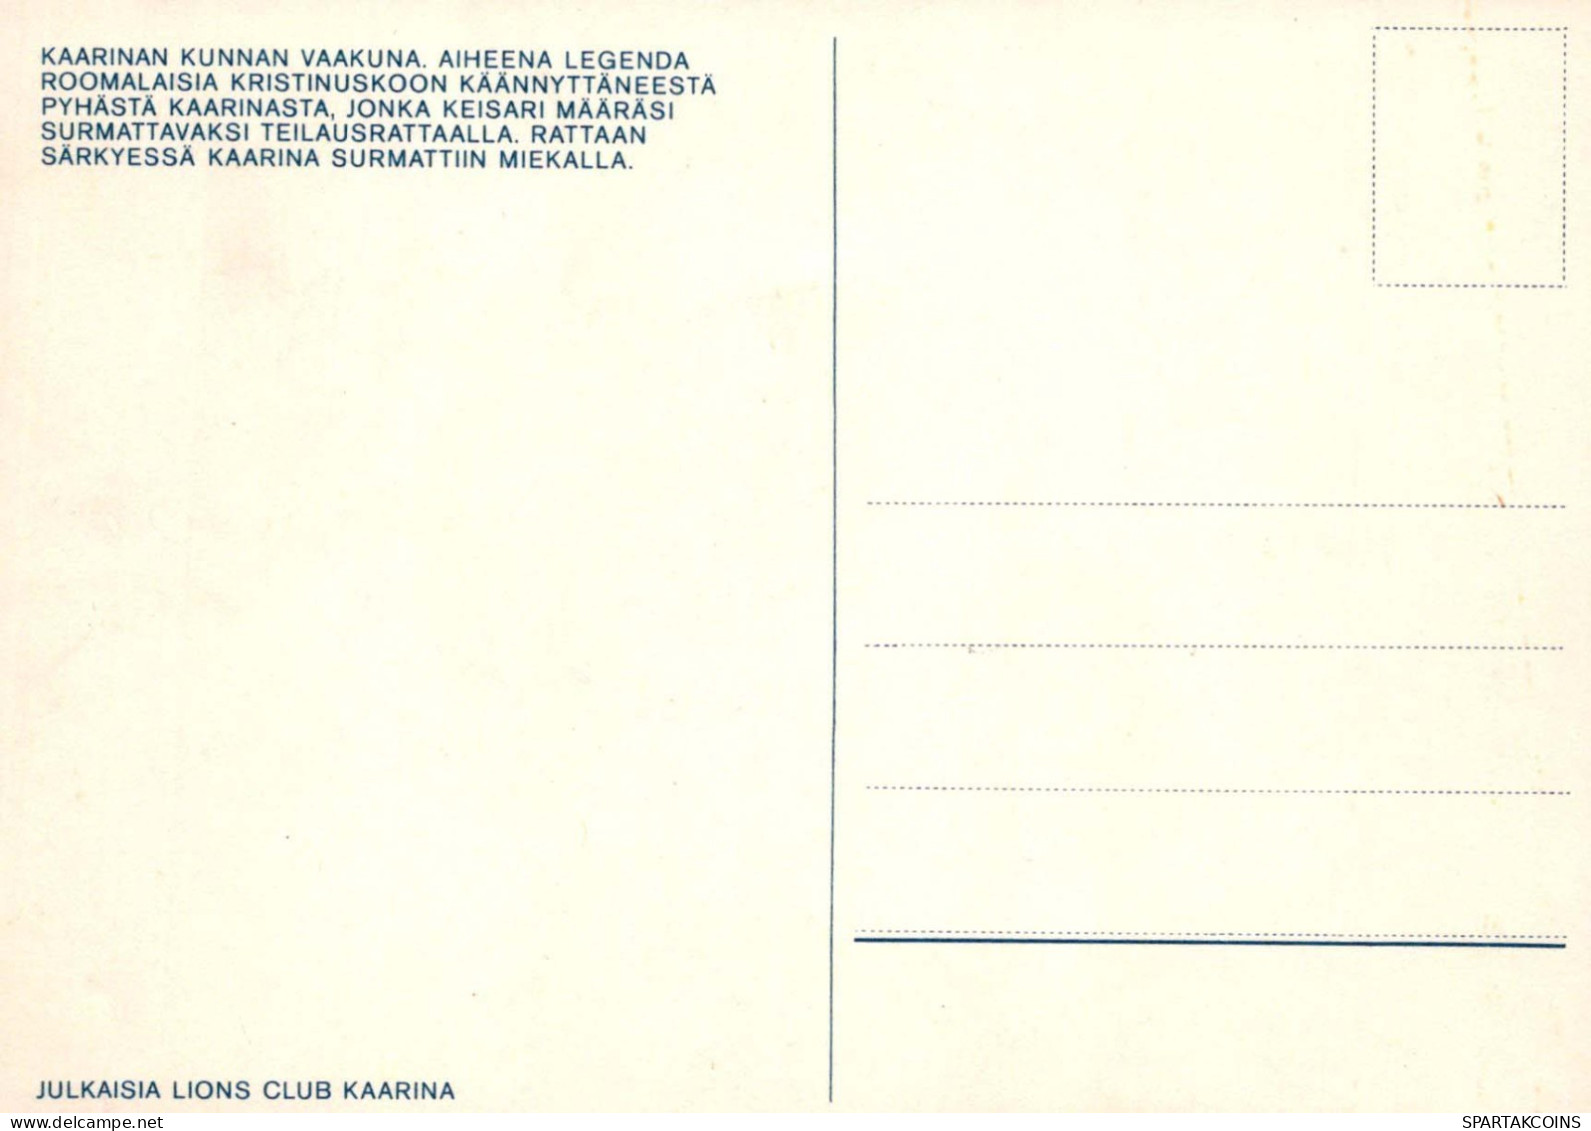 HOLY CARINA FINLANDIA KAARINA COAT OF ARMS HOLY CARINA Vintage Cartolina CPSM #PBQ250.A - Santi